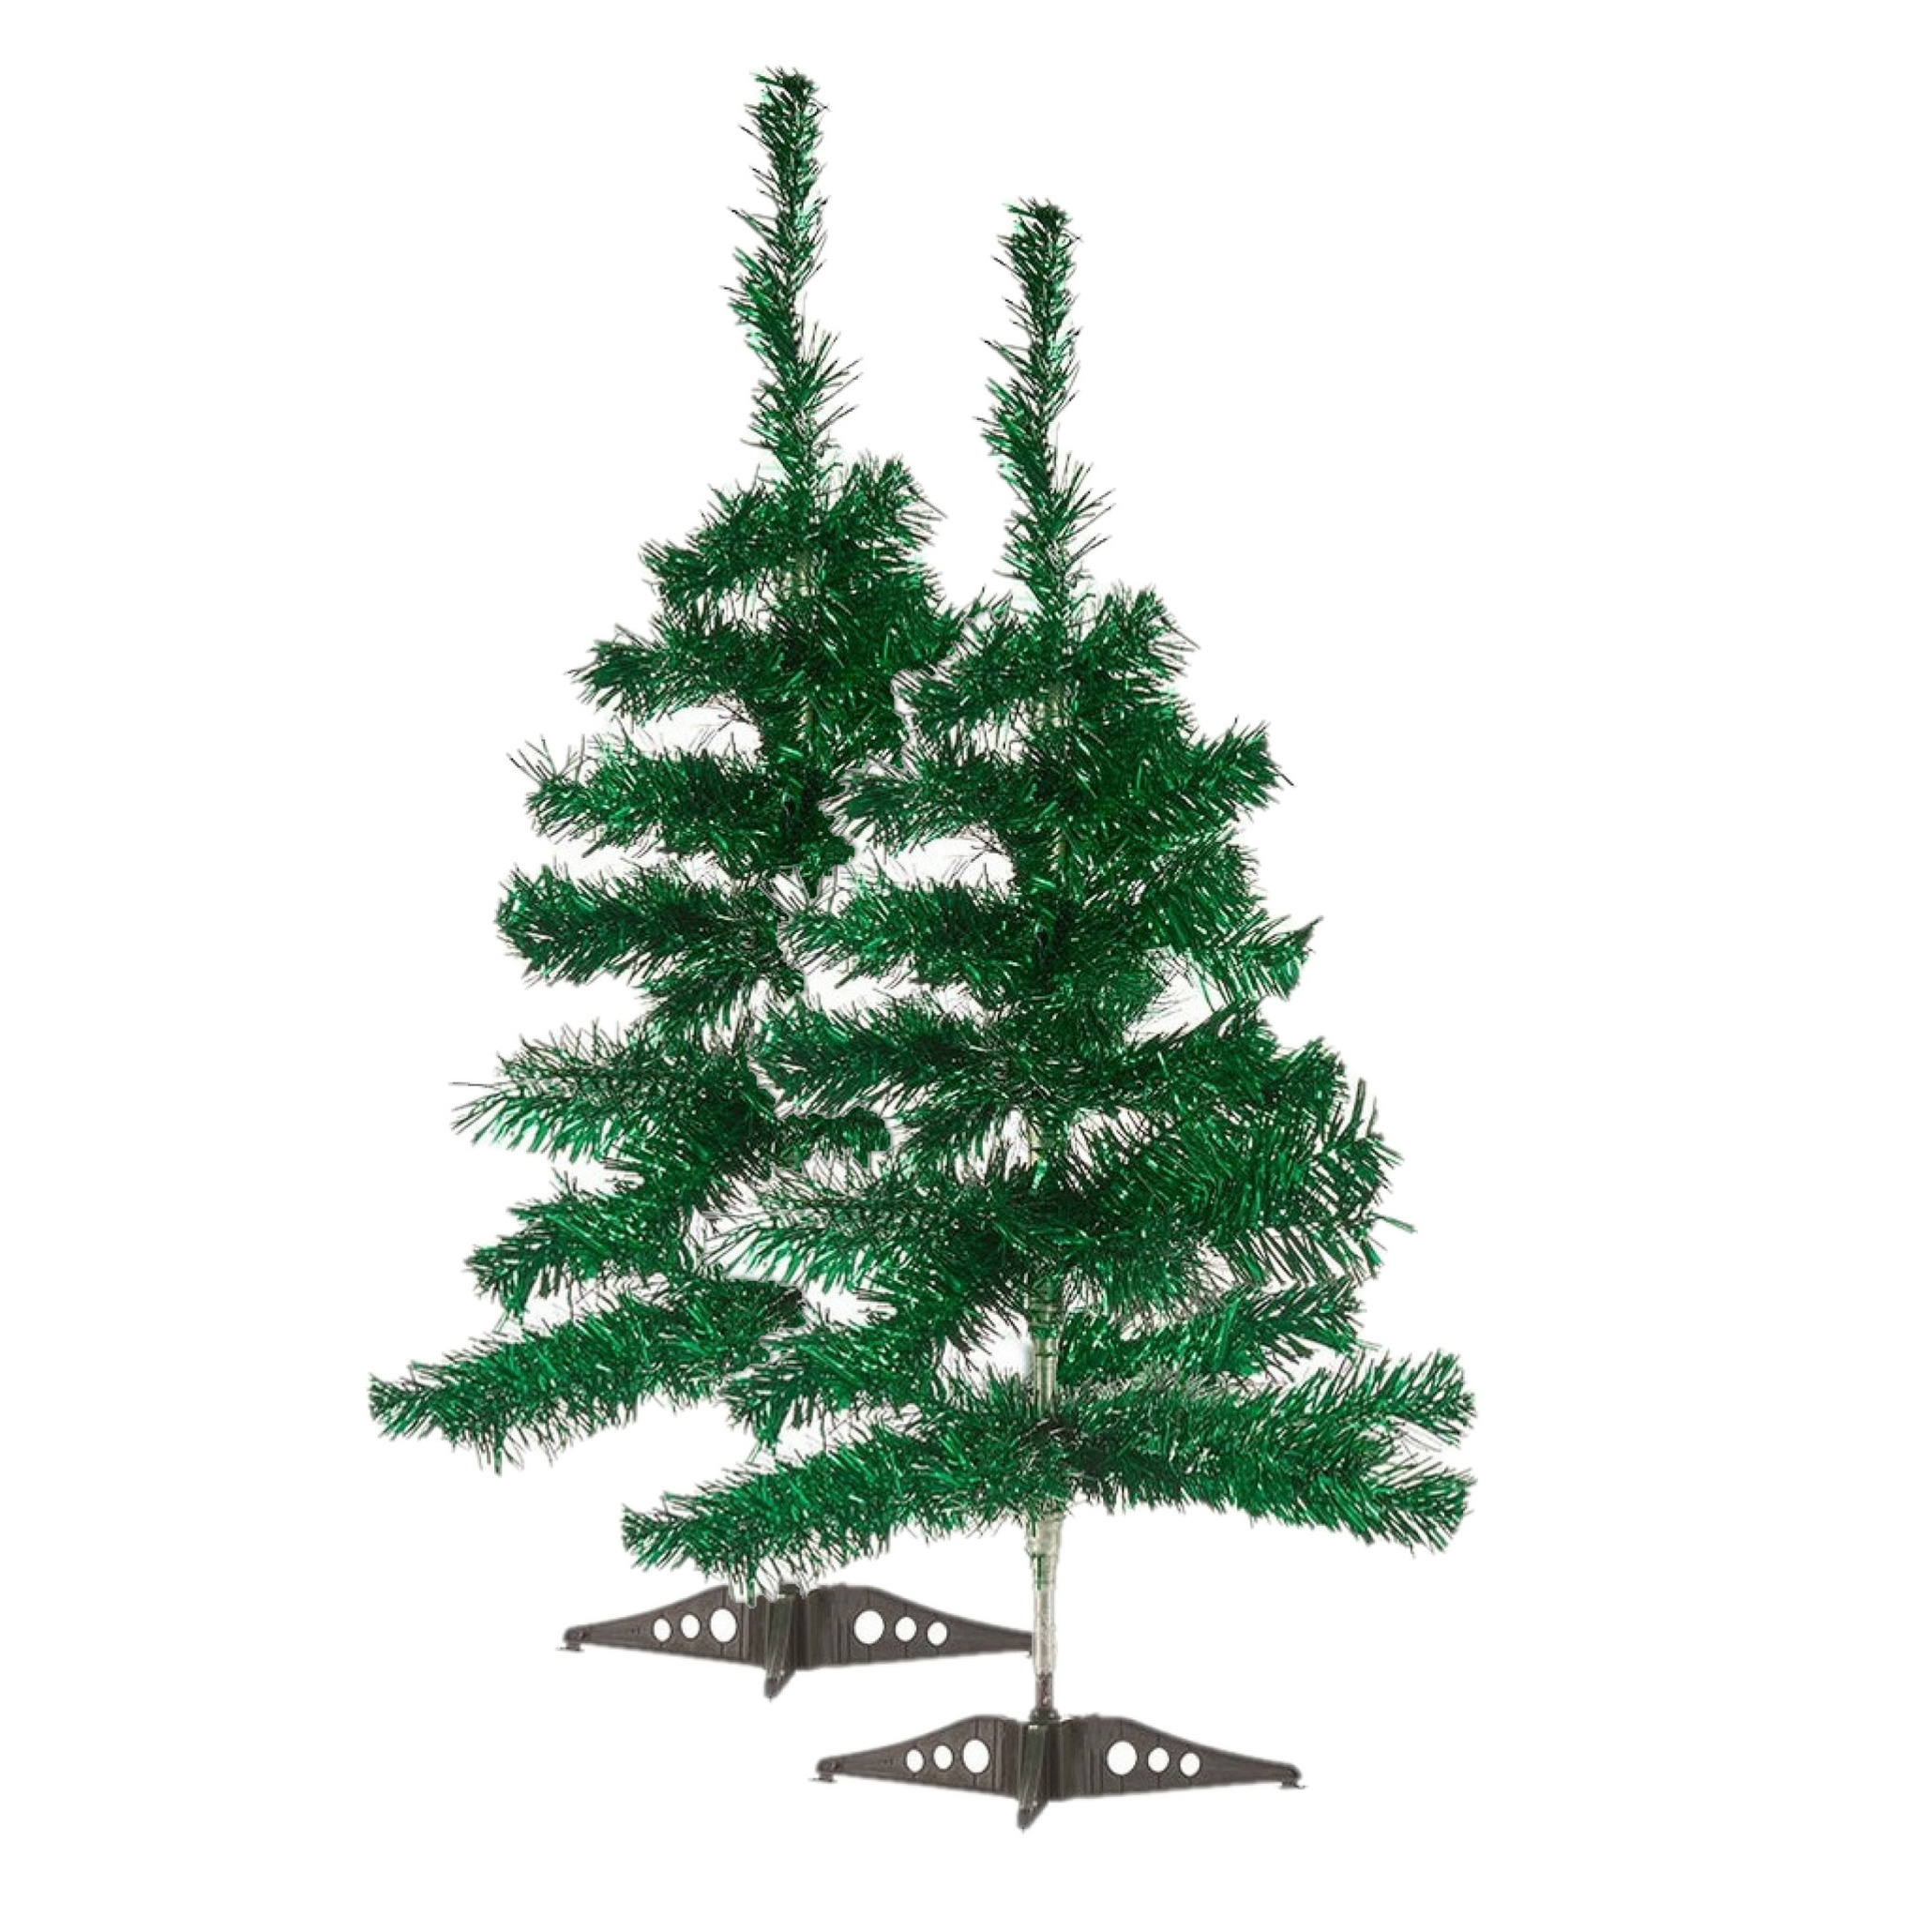 2x stuks kleine glitter groene kerstbomen van 60 cm